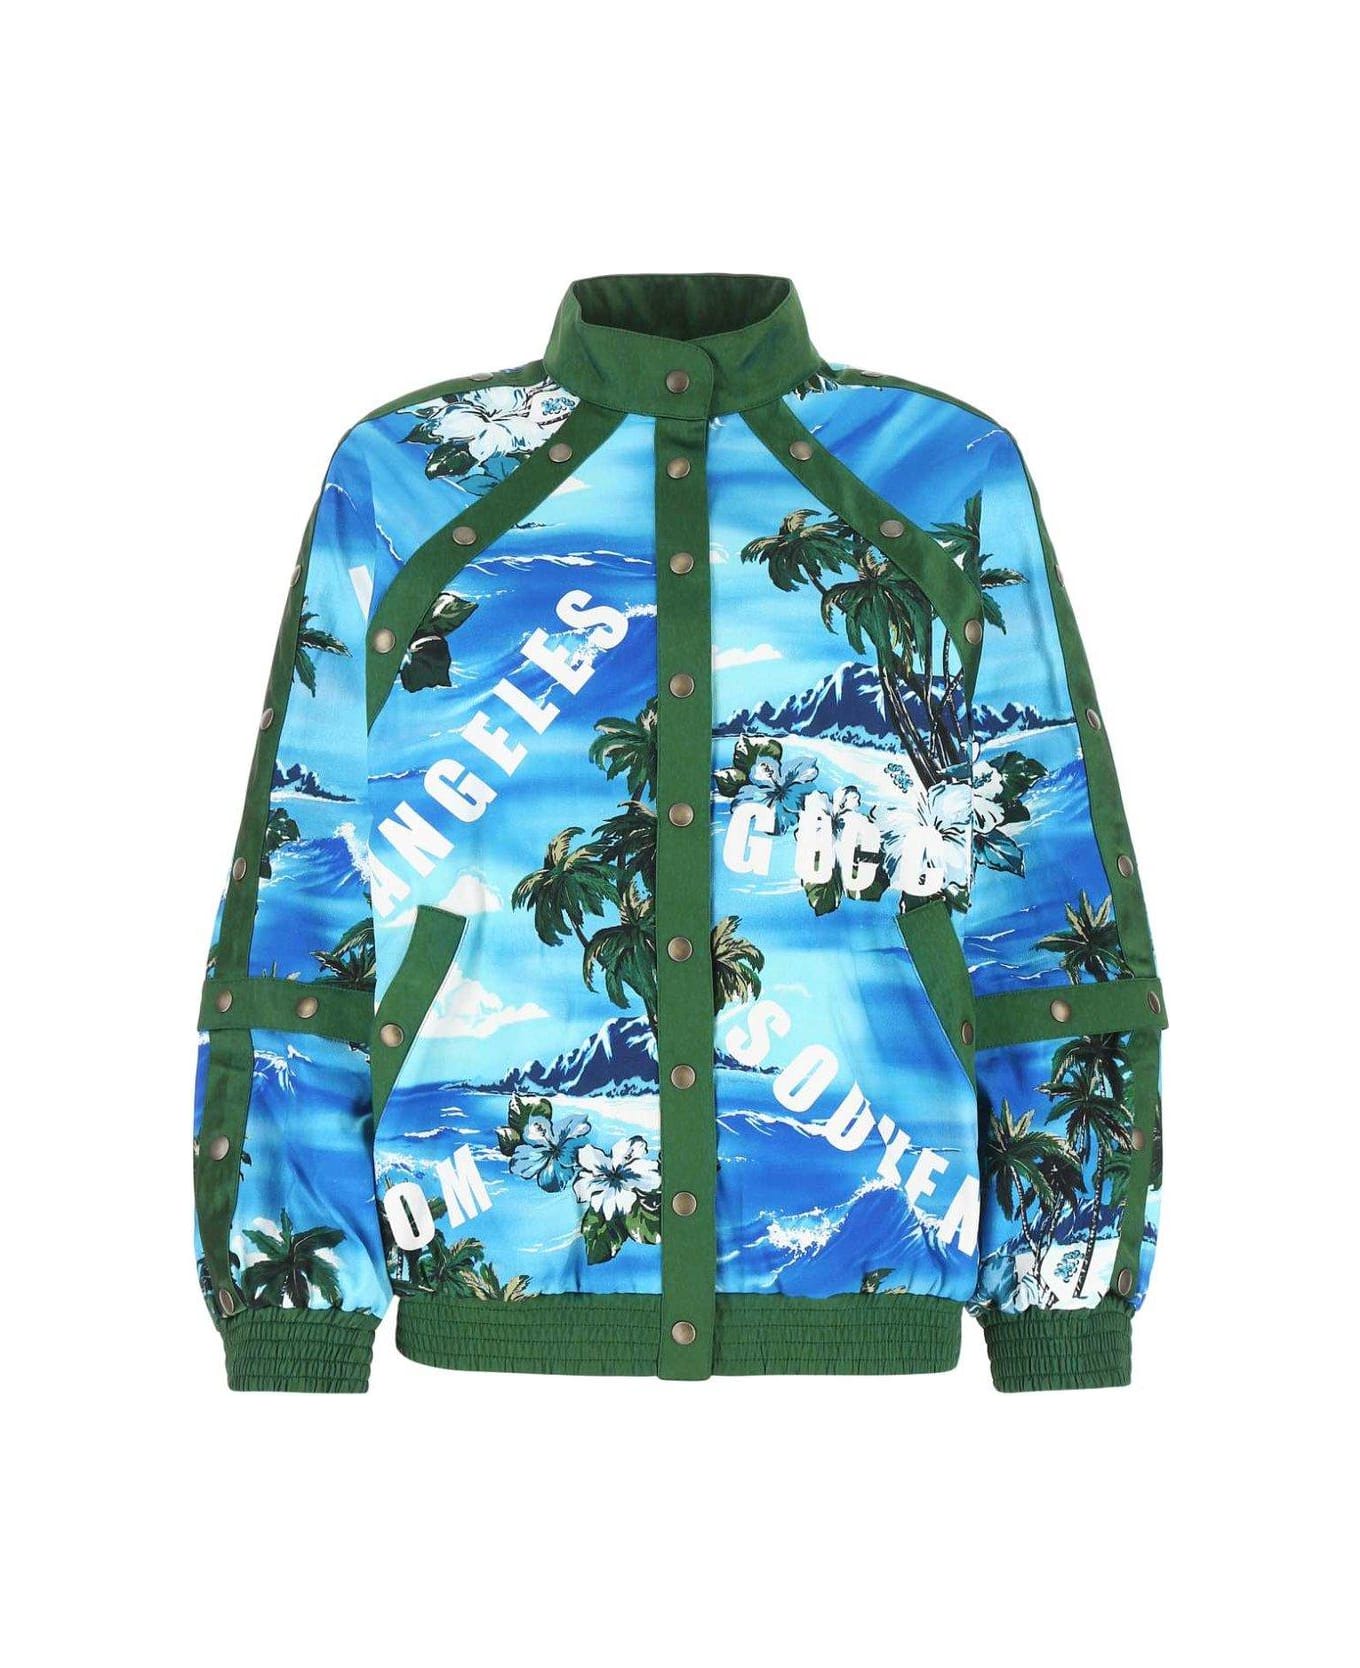 Gucci Graphic Printed Long-sleeved Jacket - Blu/Verde